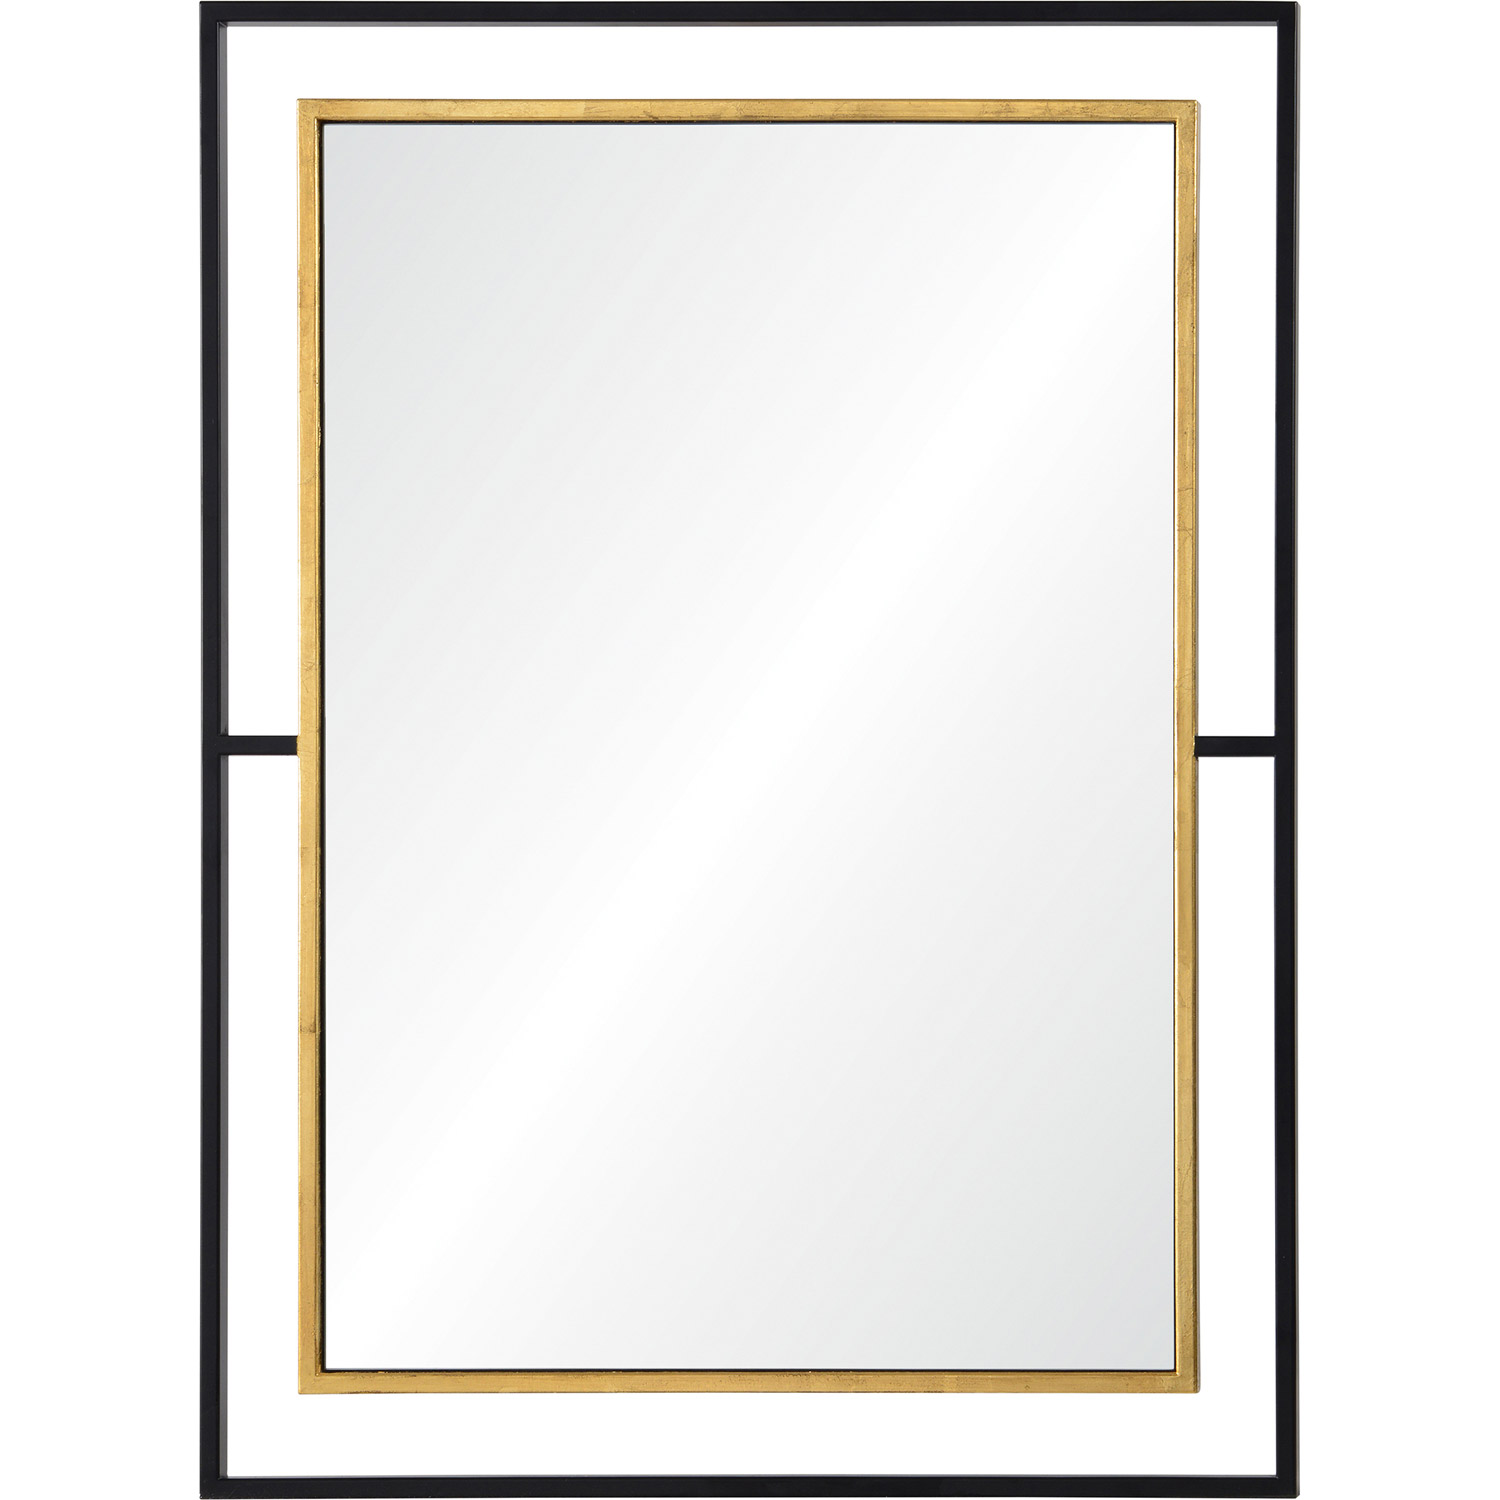 Ren-Wil Gray Rectangle Mirror - Black/Antique Gold